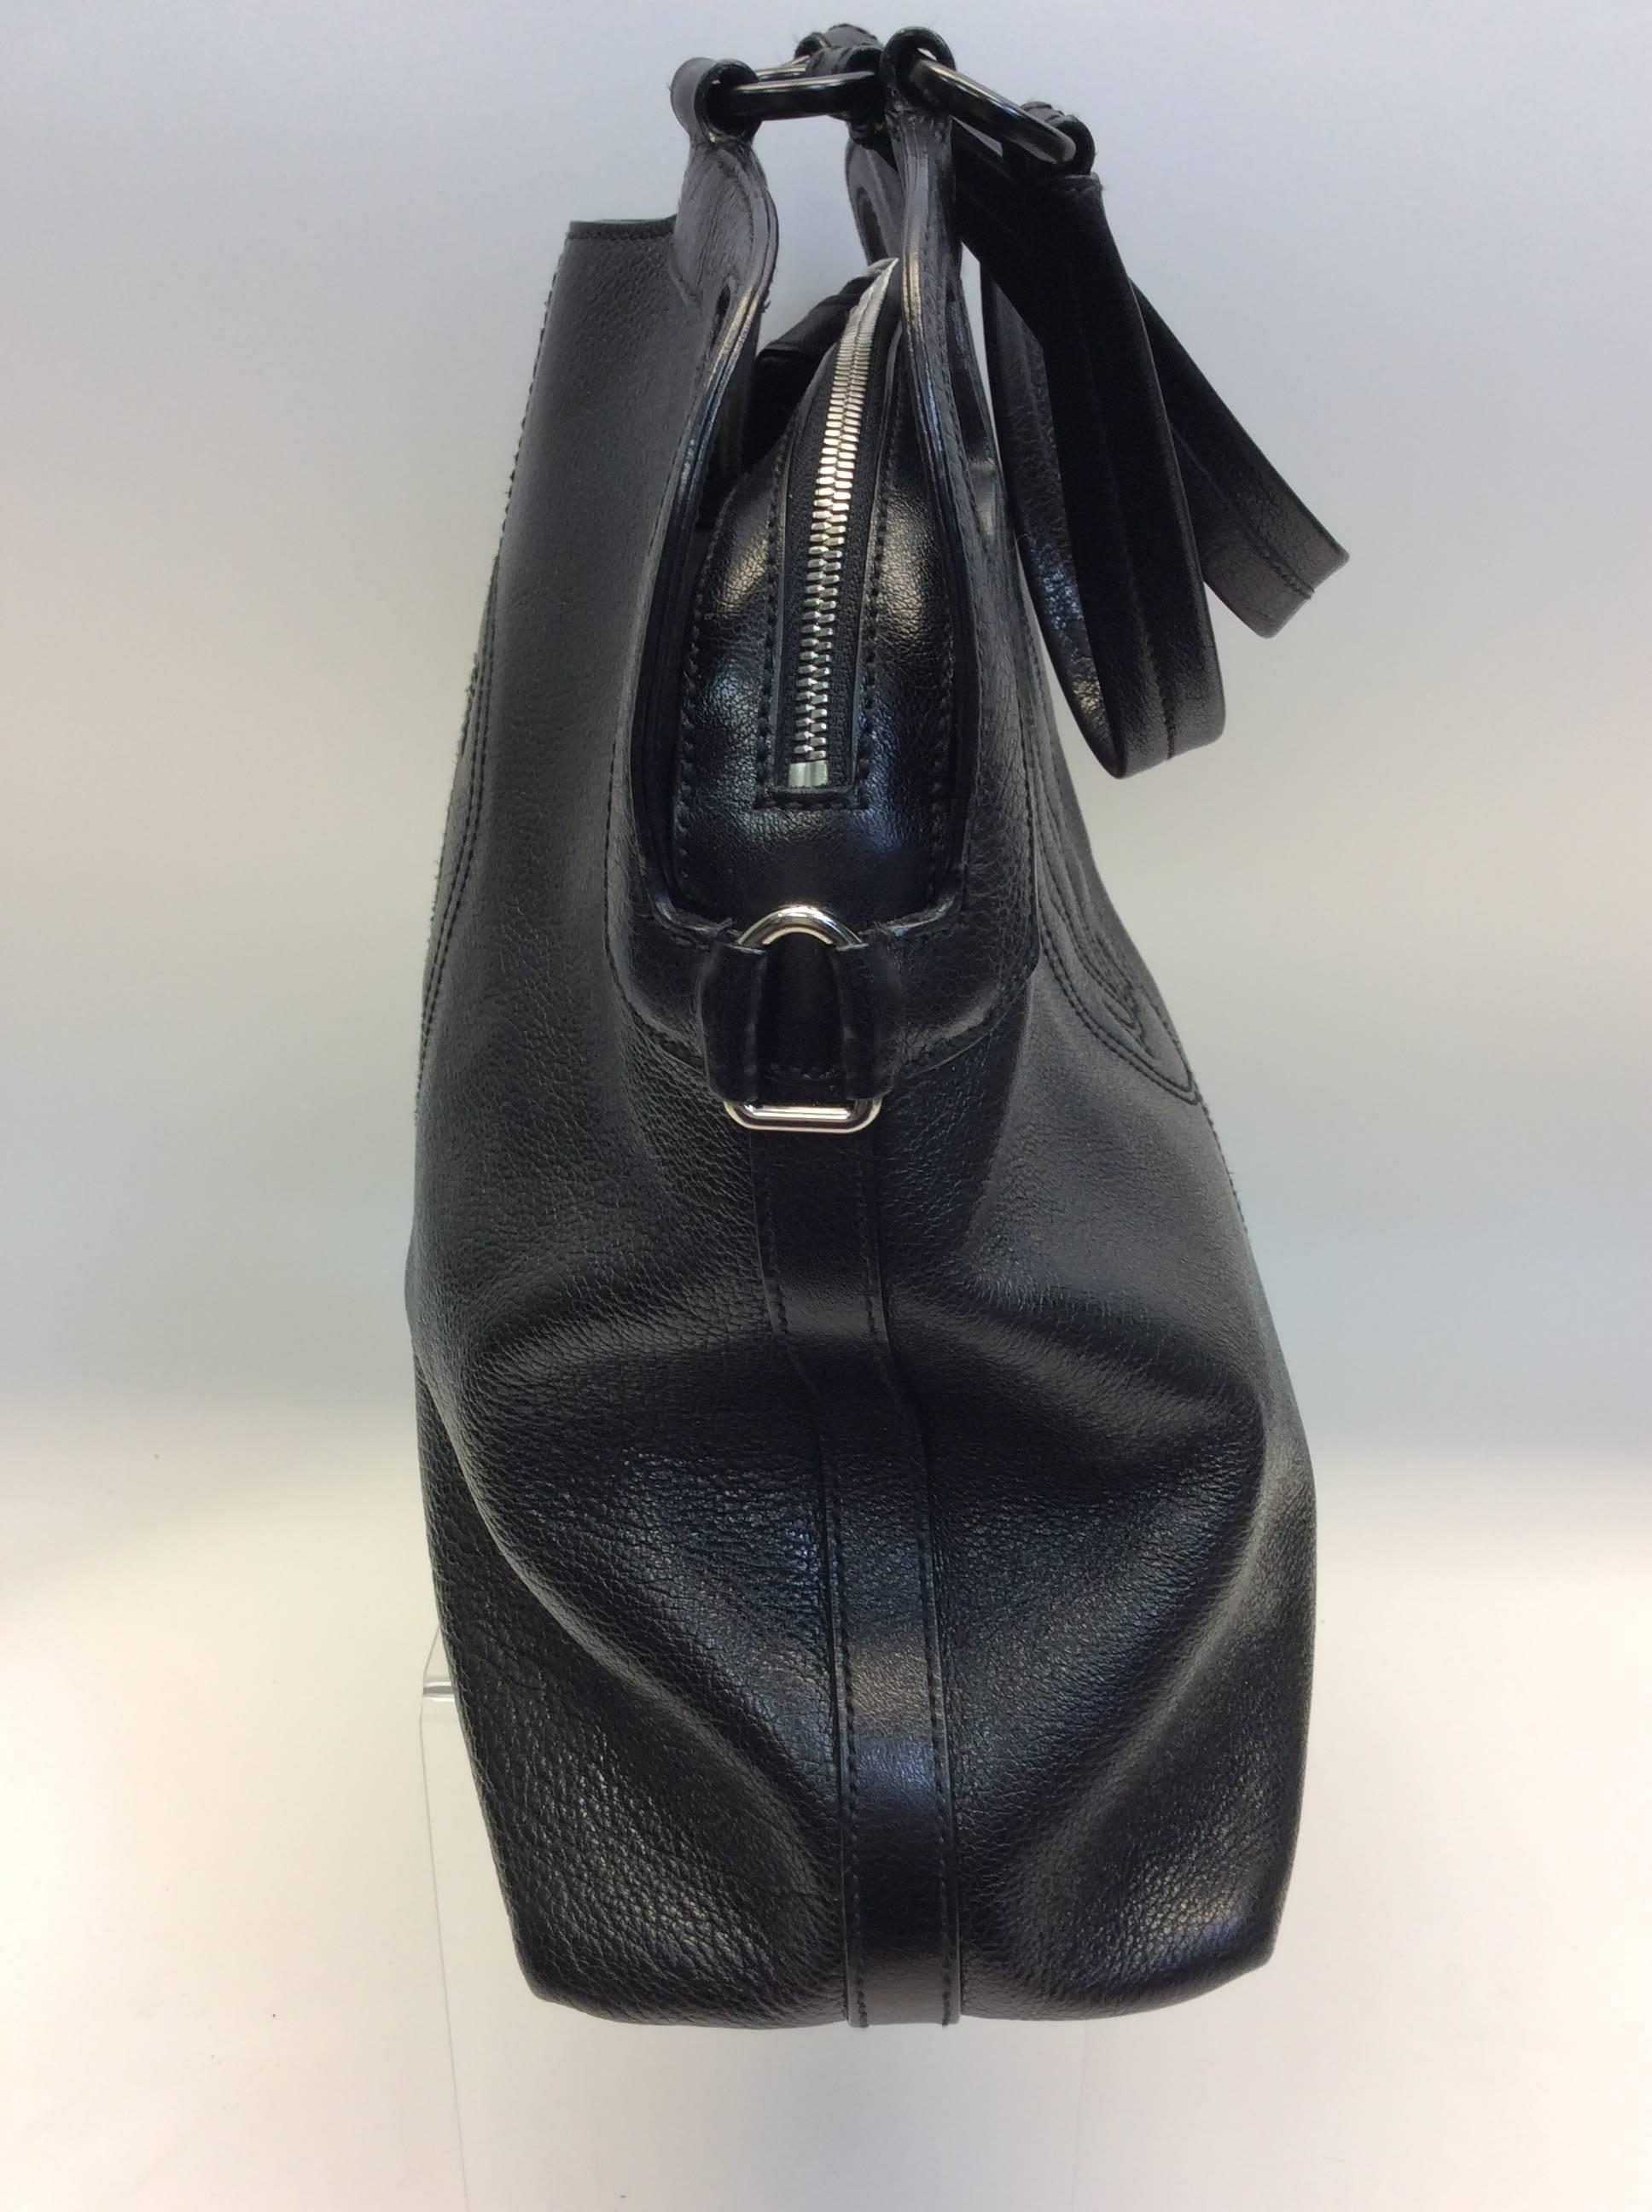 Cartier Black Leather Marcello Large Handbag
$1699
Leather
16